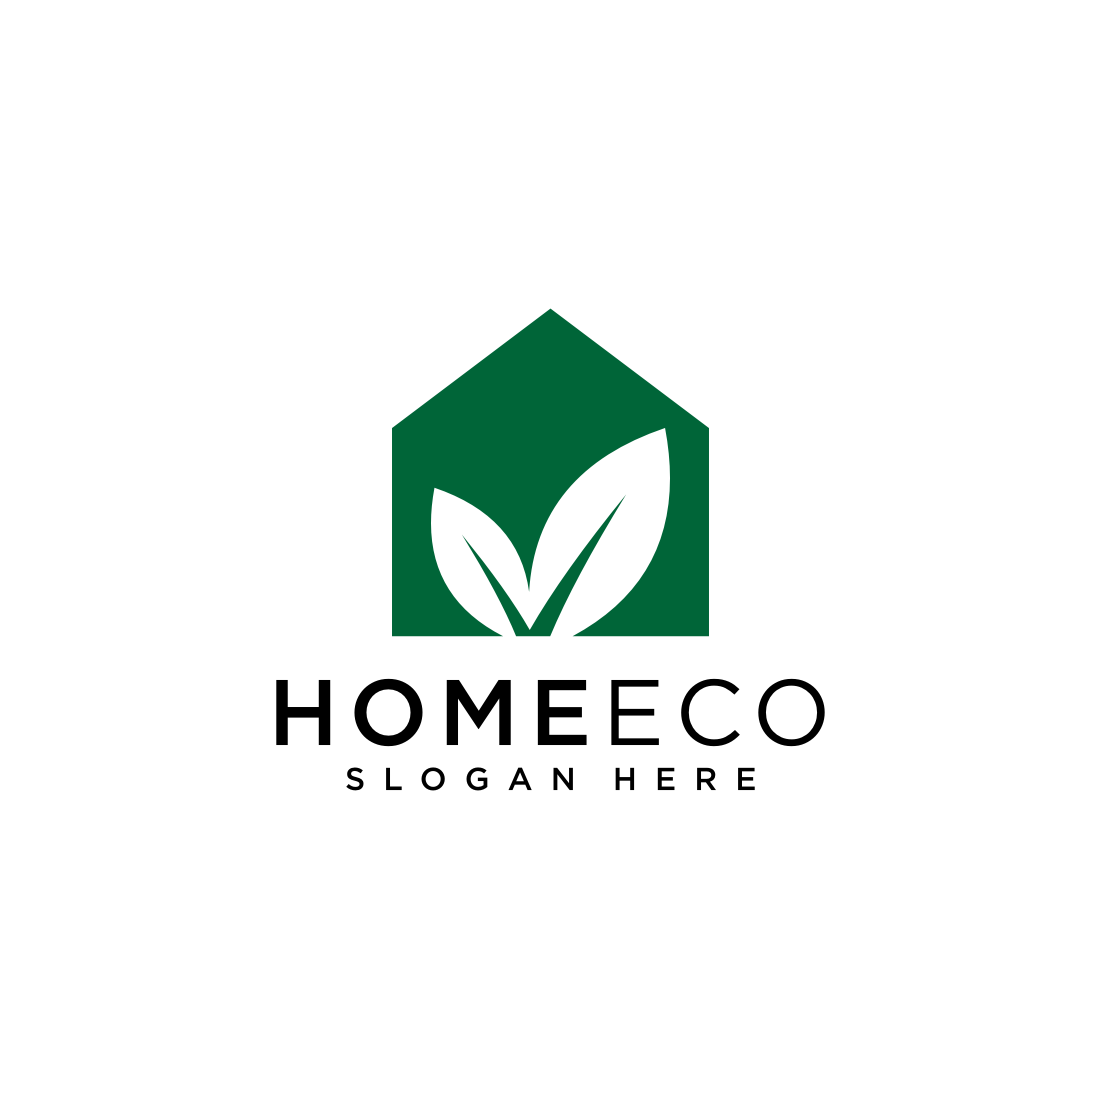 home eco leaf logo design vector cover image.